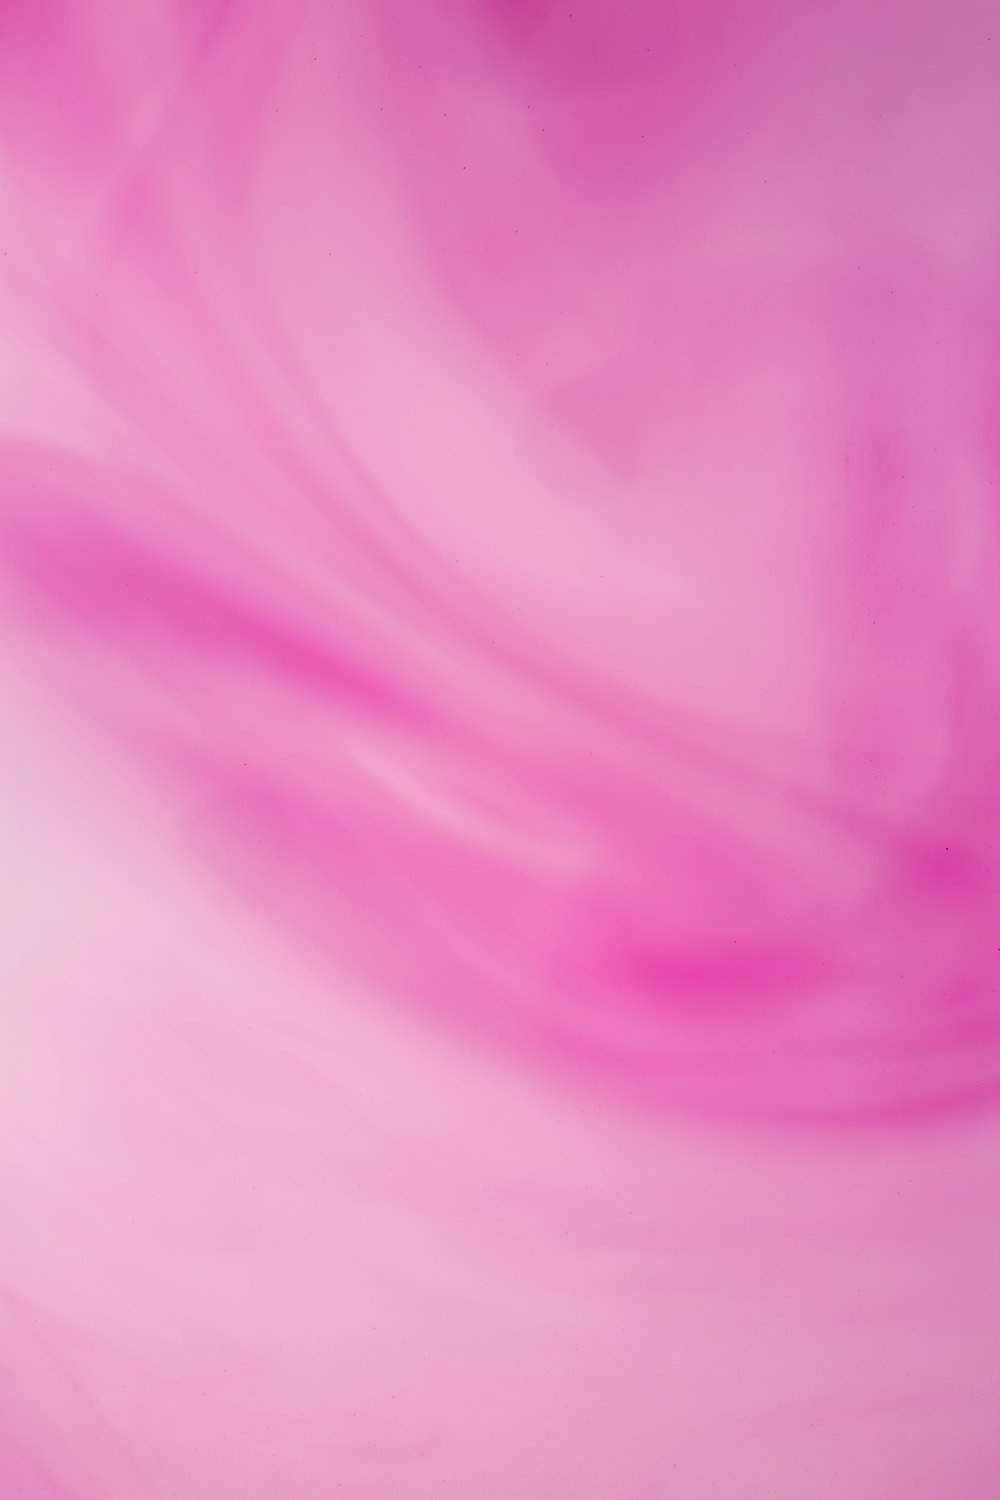 Magenta Background Pictures | Download Free Images on Unsplash